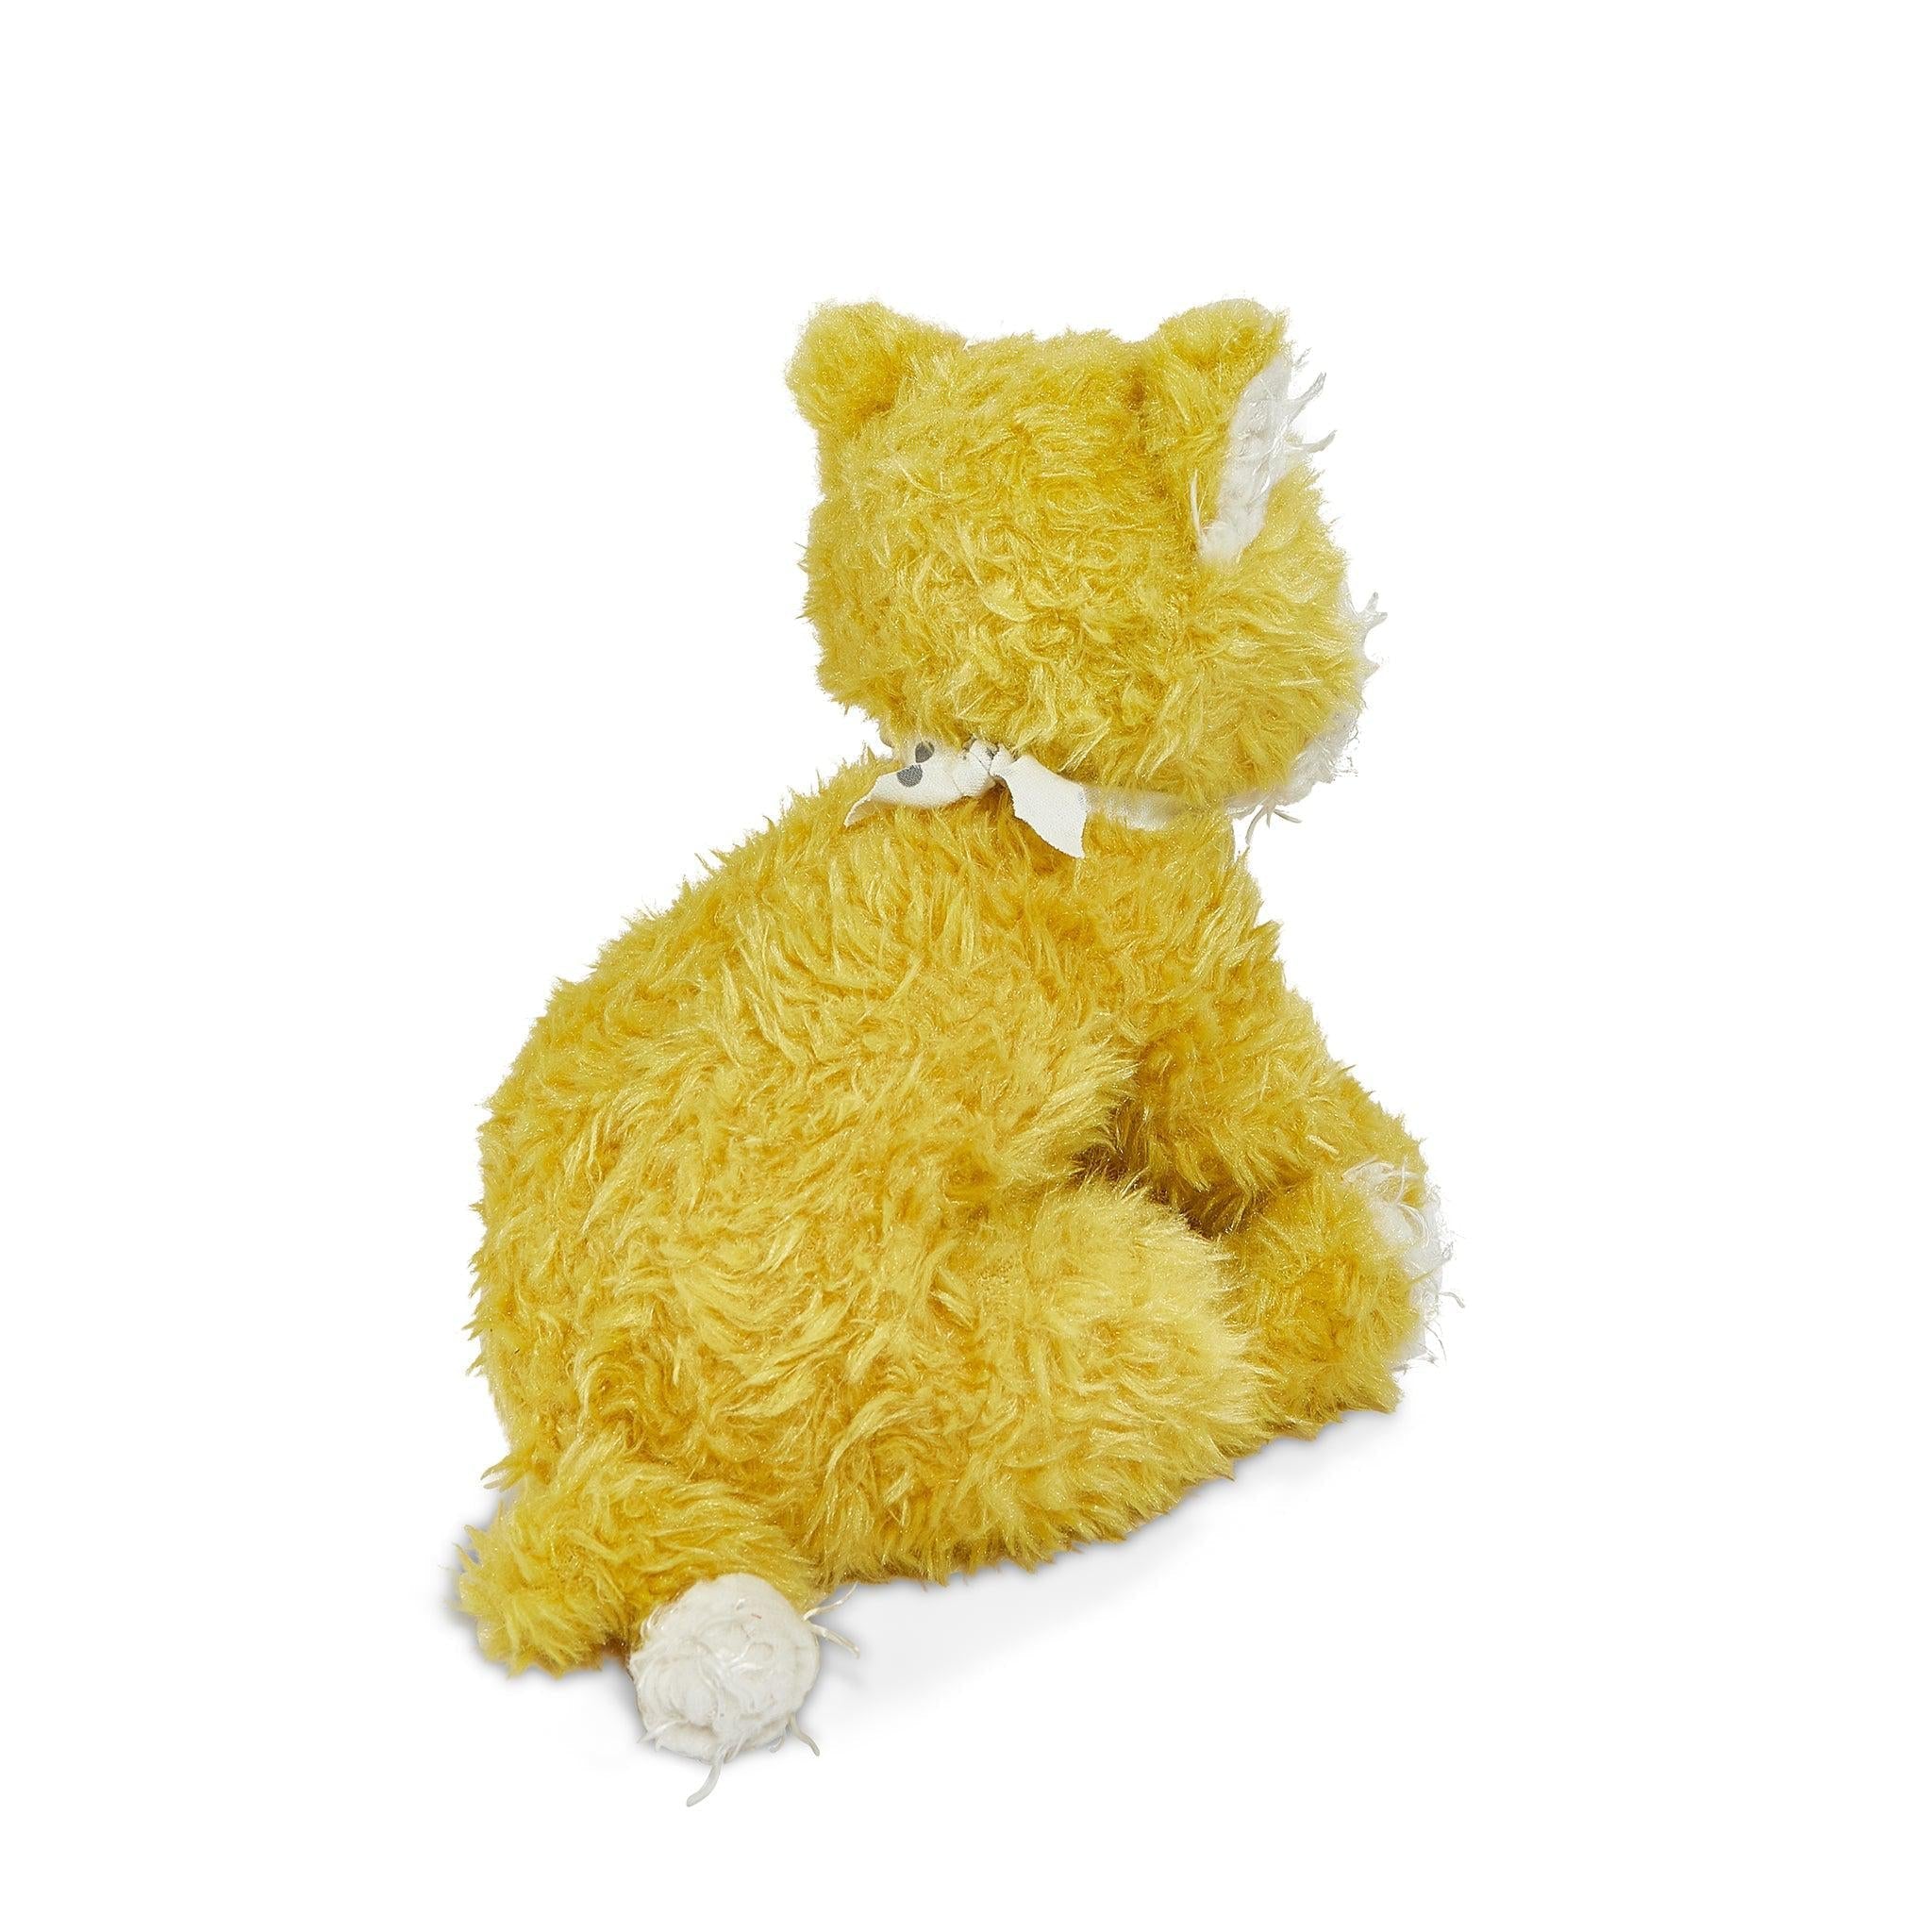 Alley Cat-Stuffed Animal-SKU: 106072 - Bunnies By The Bay